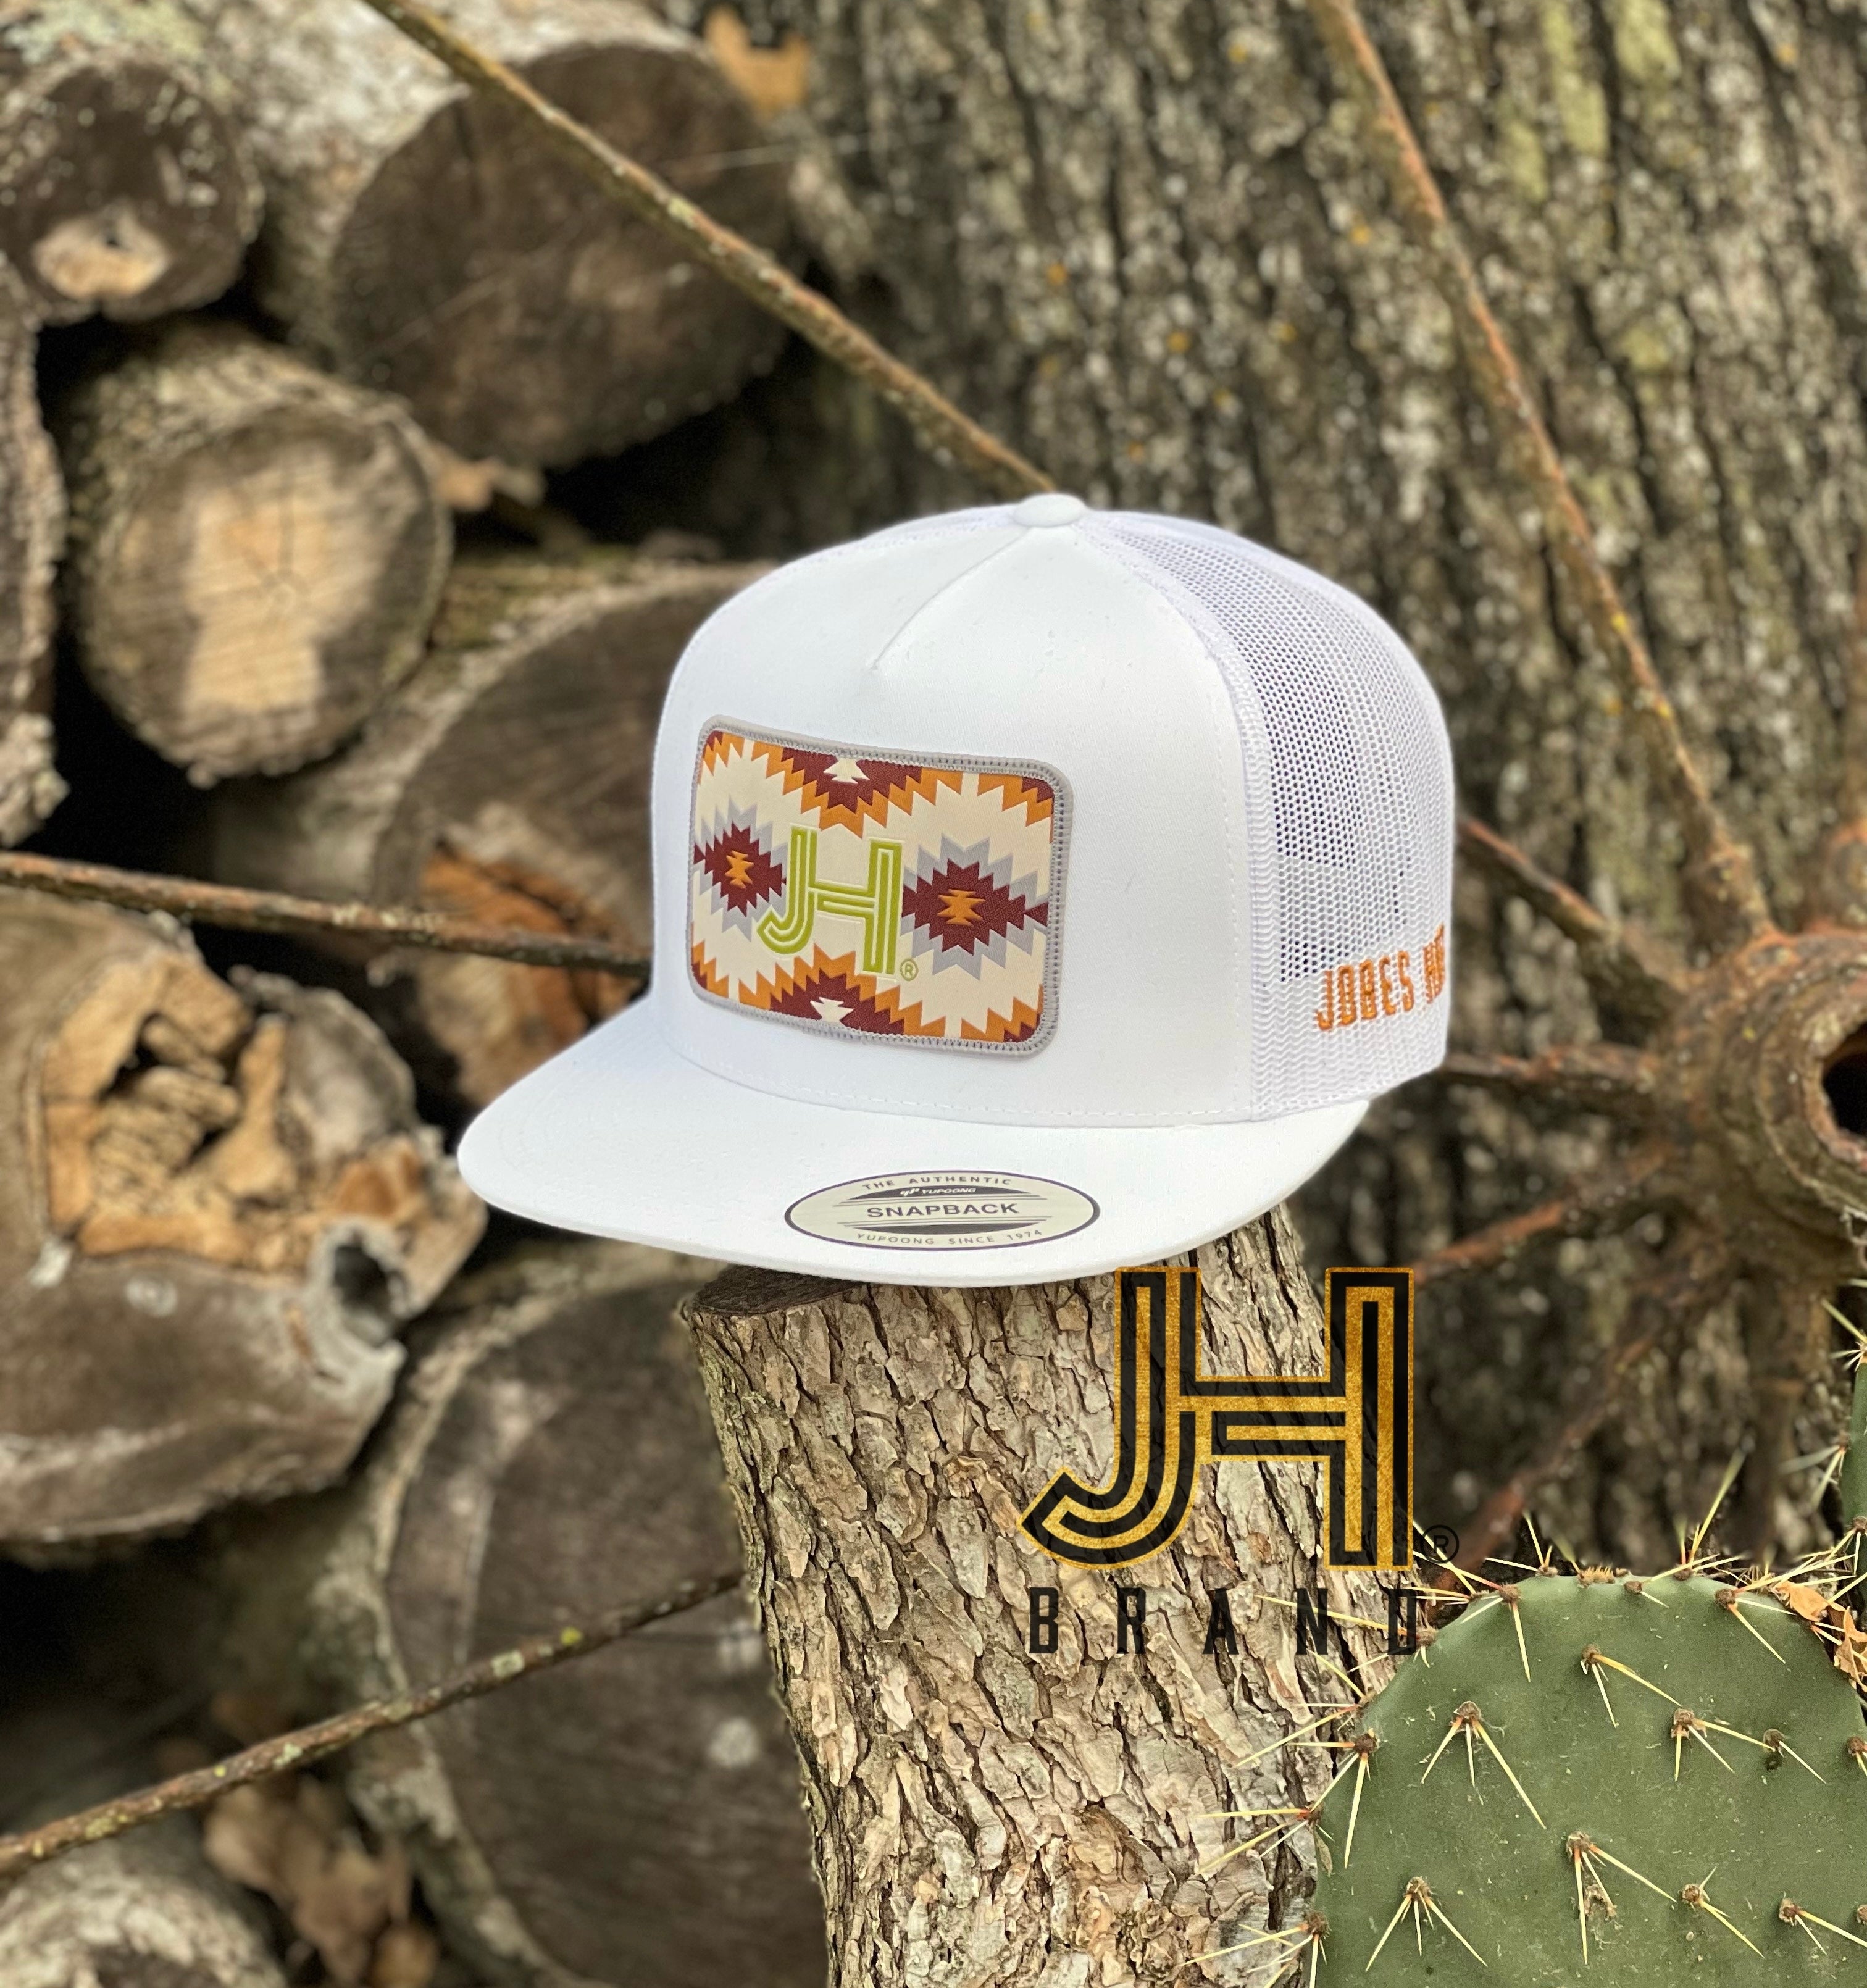 New 2022 Jobes Hats Trucker cap -All White Aztec Owl patch